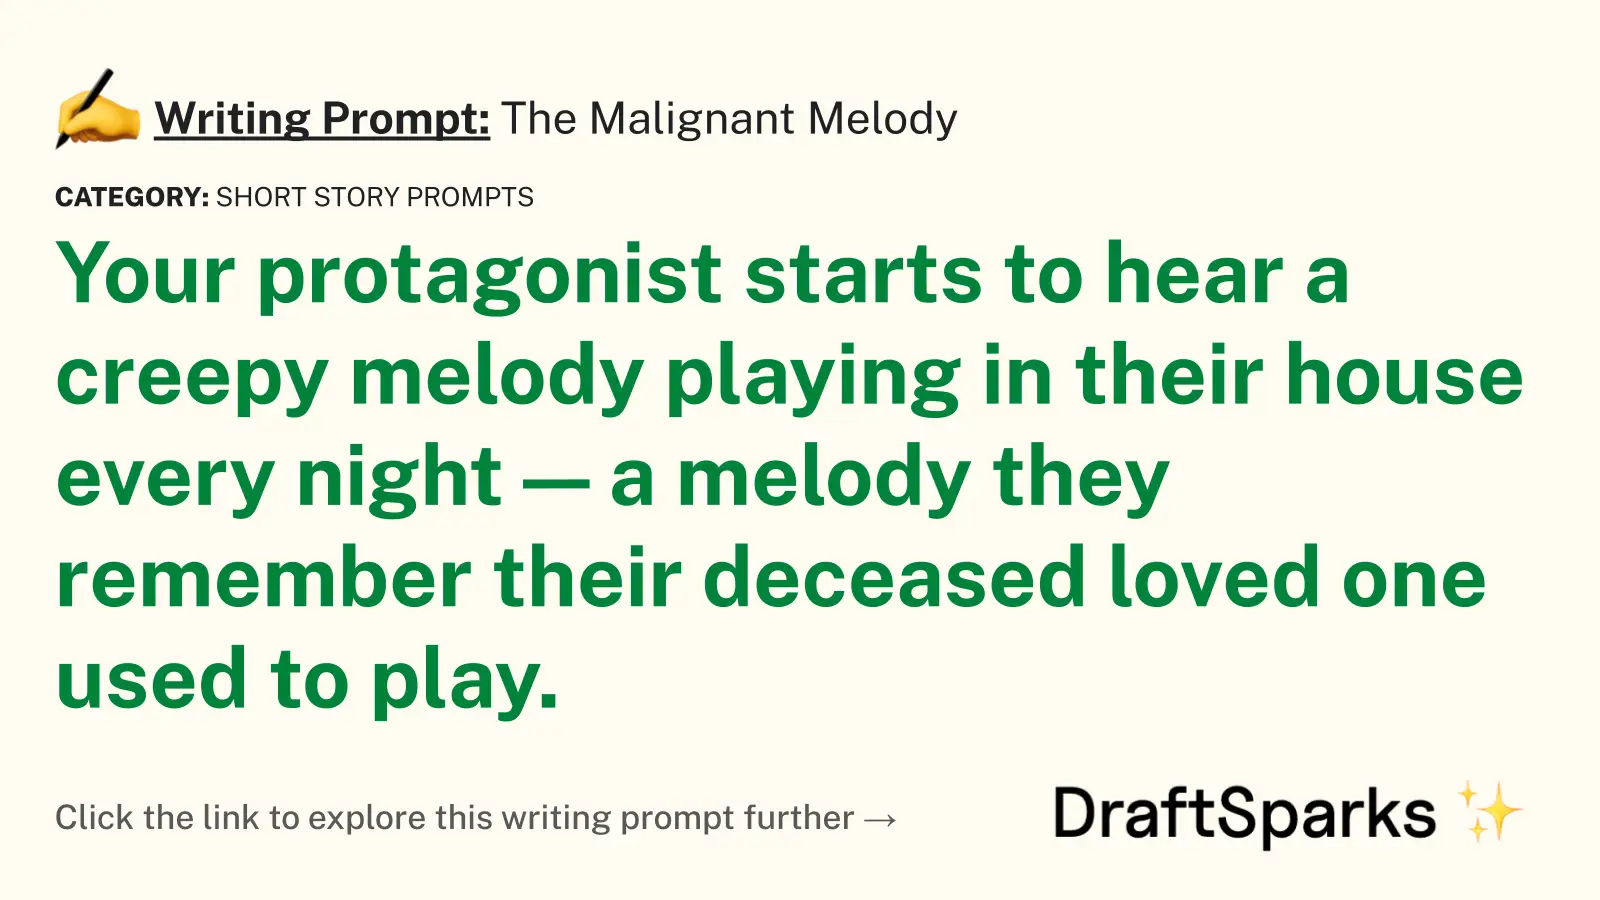 The Malignant Melody